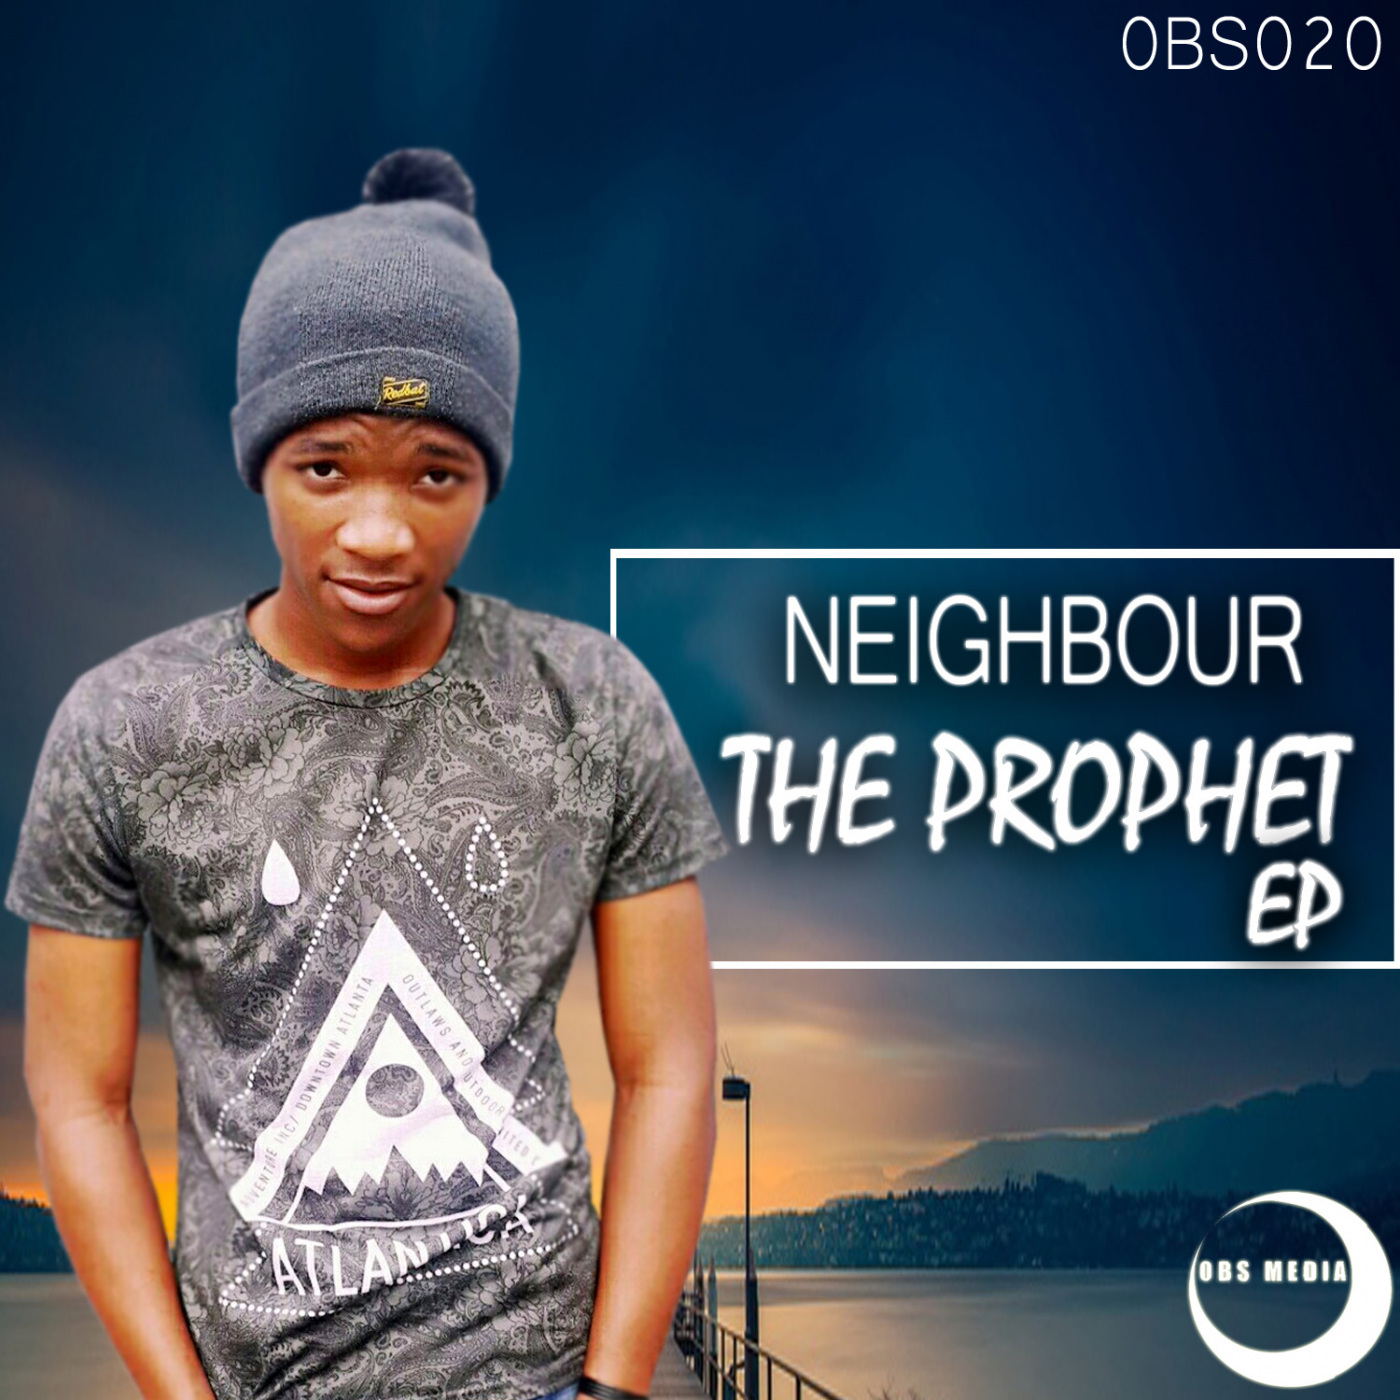 Neighbour - The Prophet EP / OBS Media